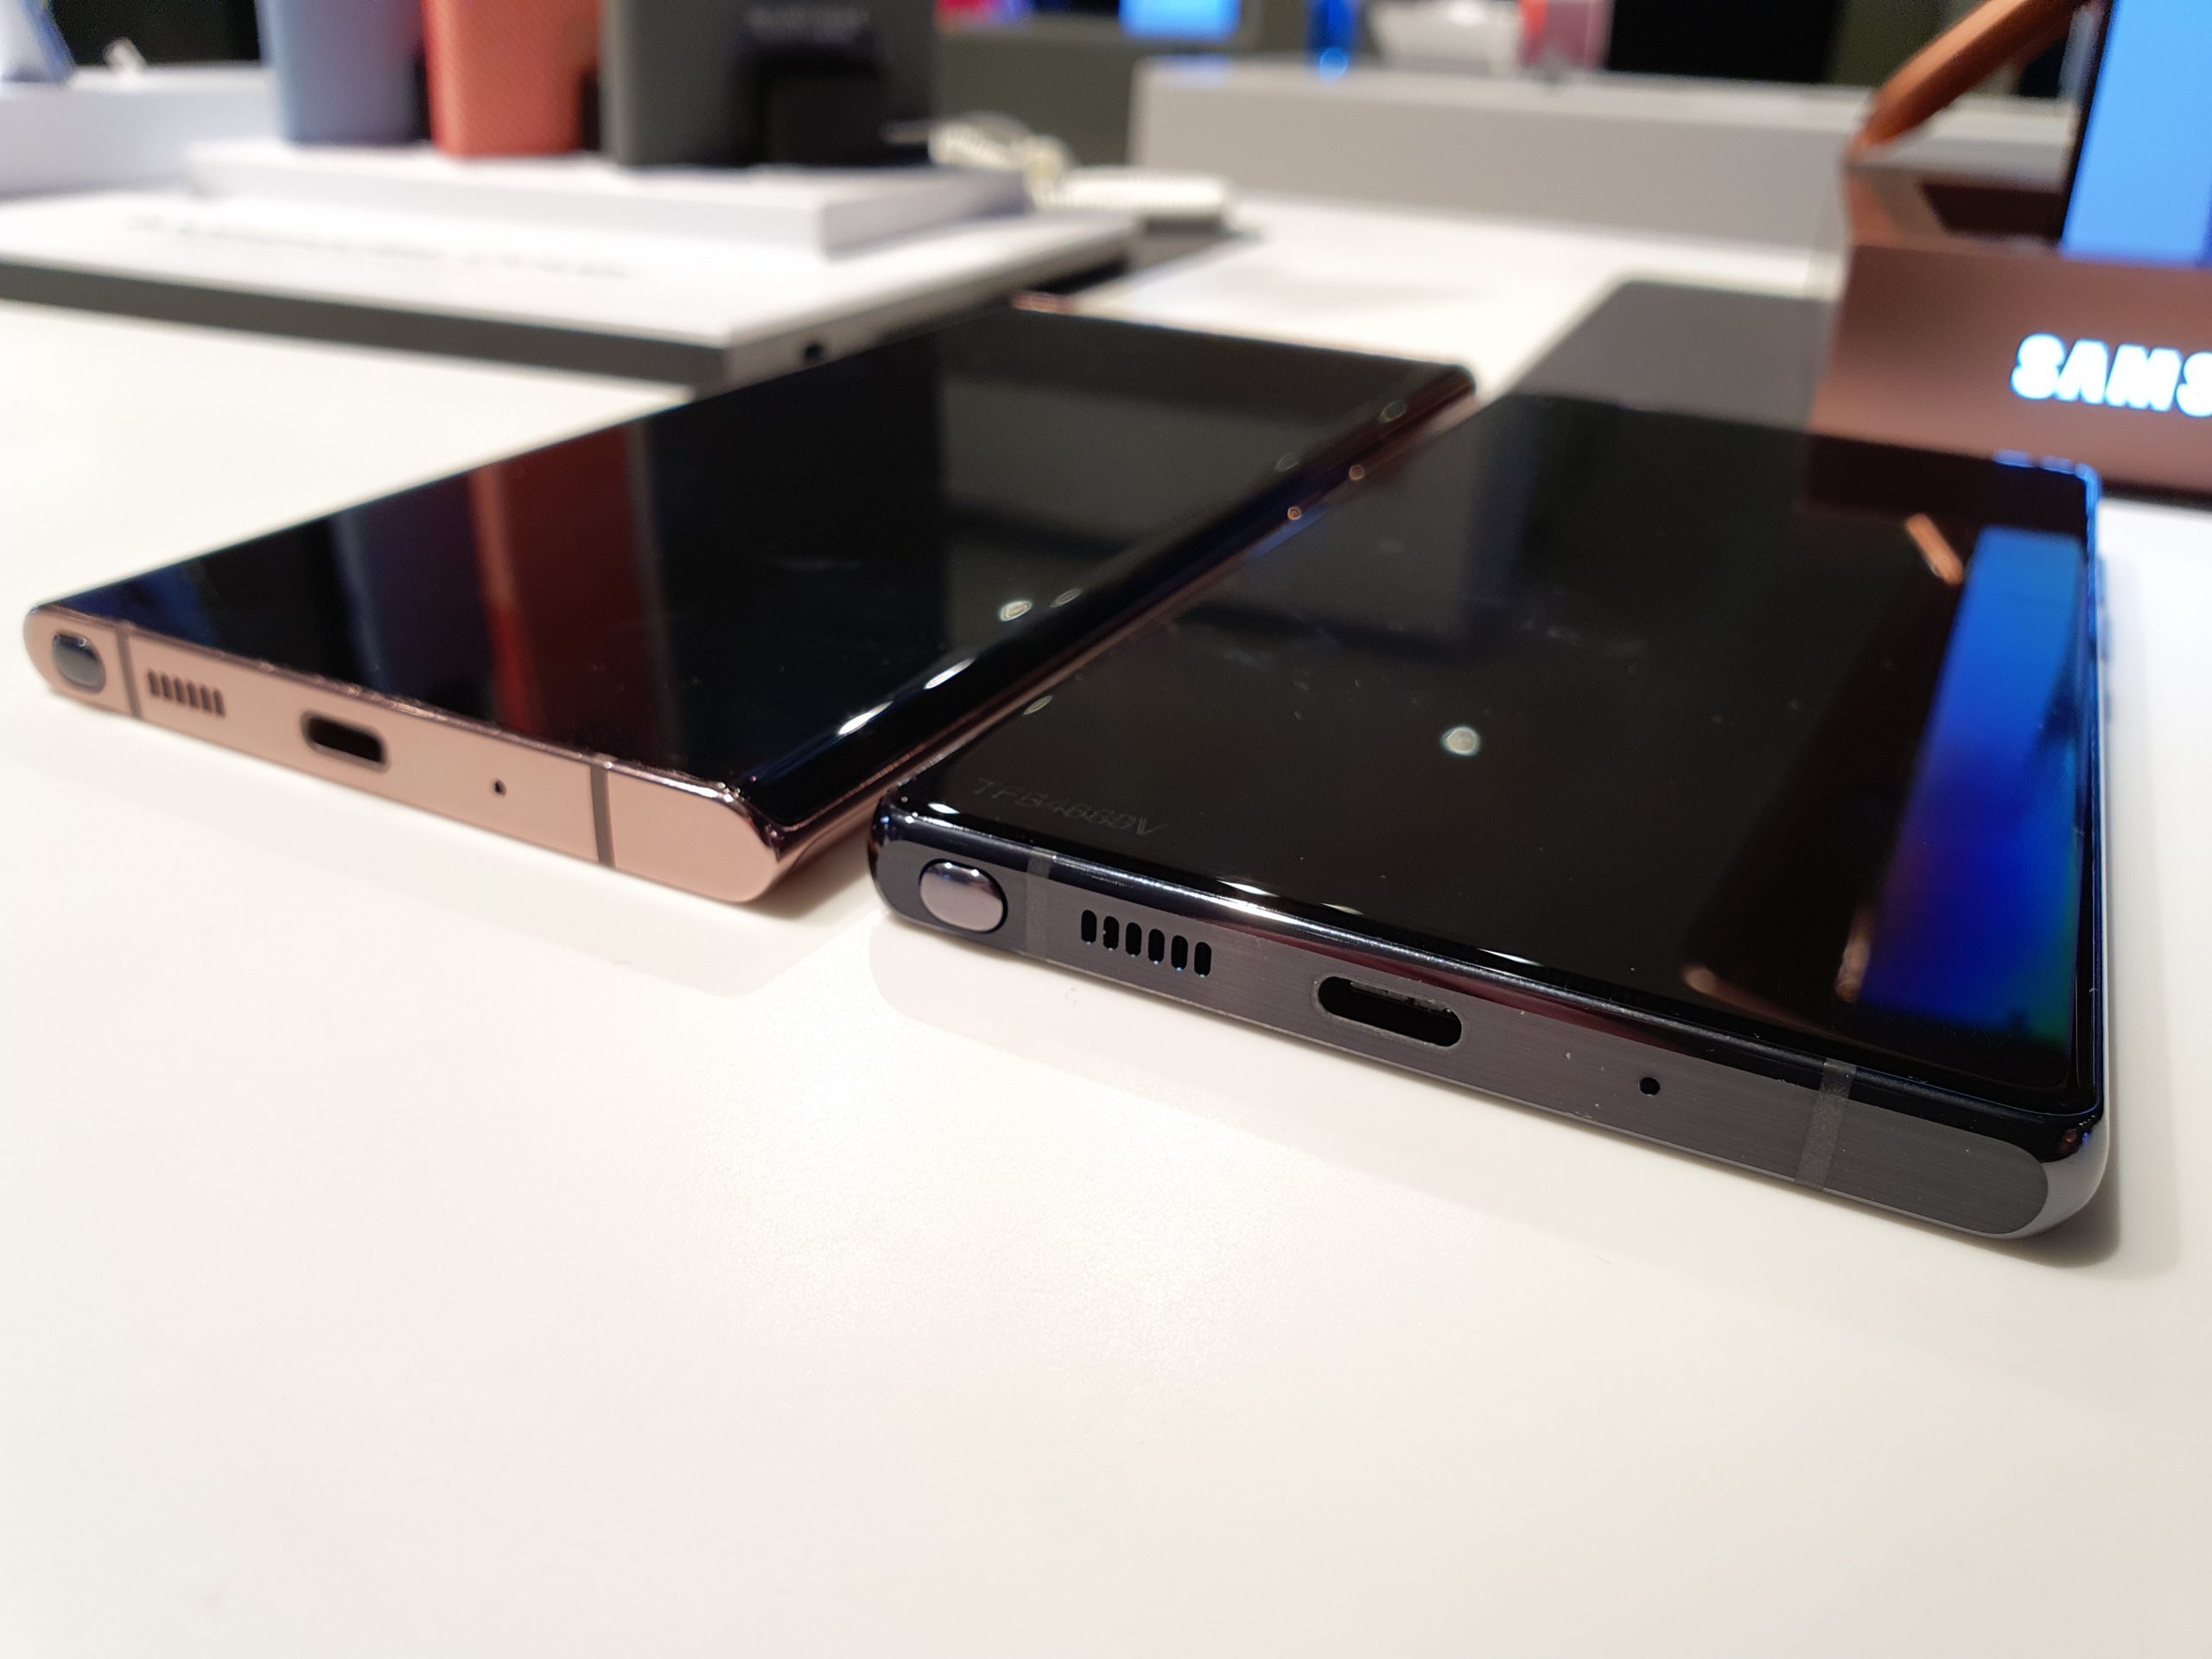 Samsung Galaxy Note 20 vs Galaxy Note 10 series: Should you upgrade?